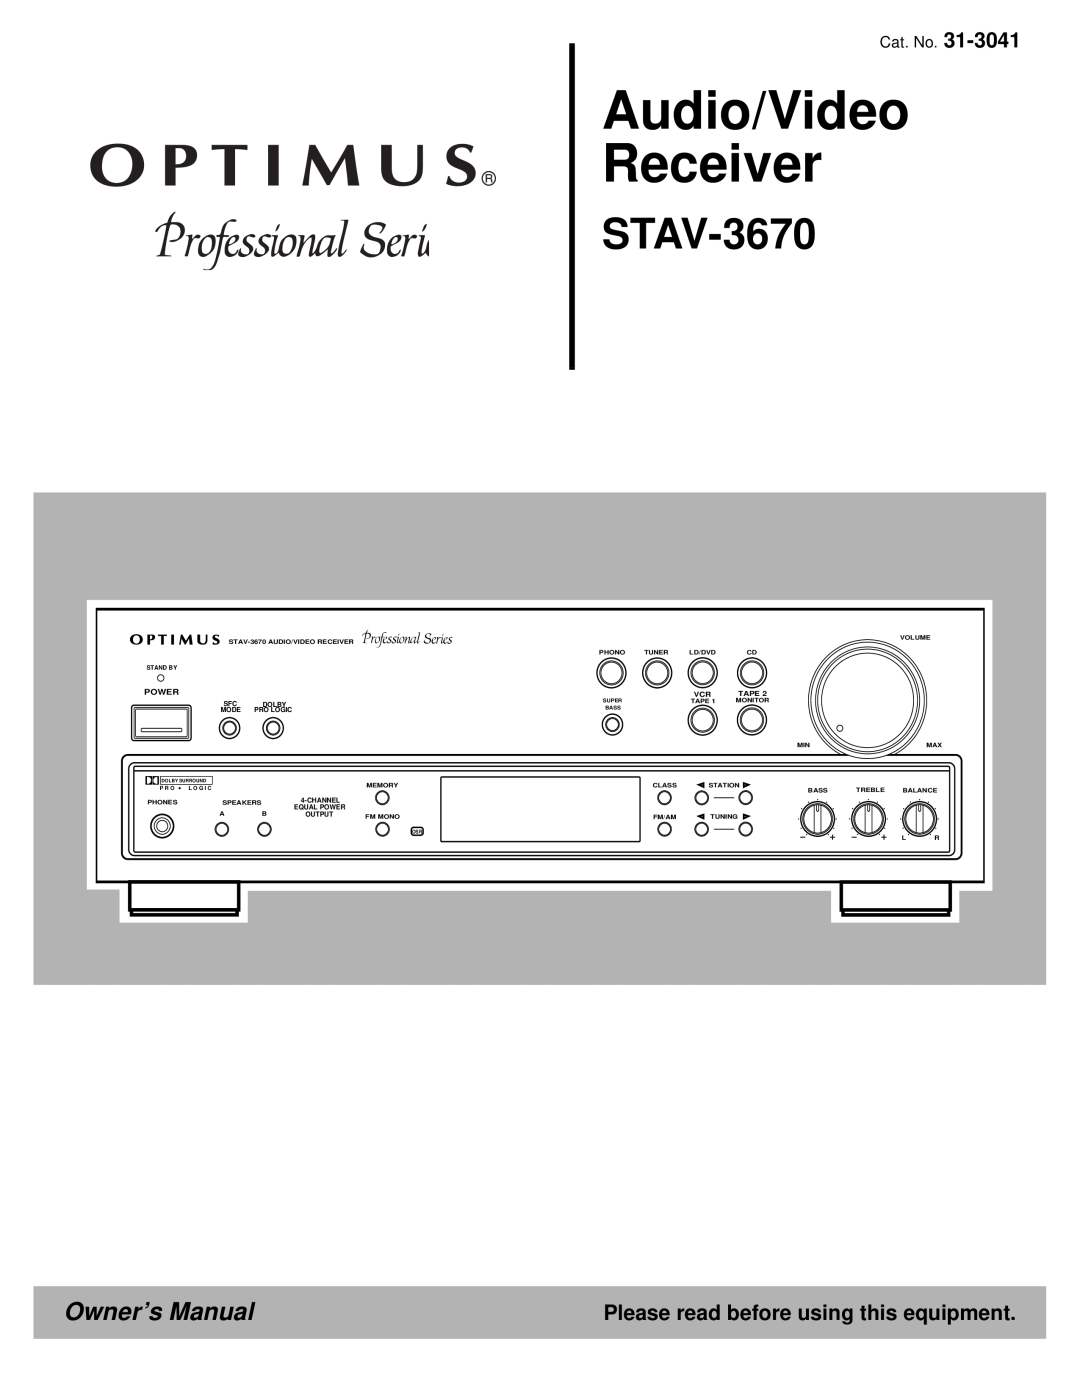 Optimus STAV-3670 owner manual Please read before using this equipment, Audio/Video Receiver, Power 